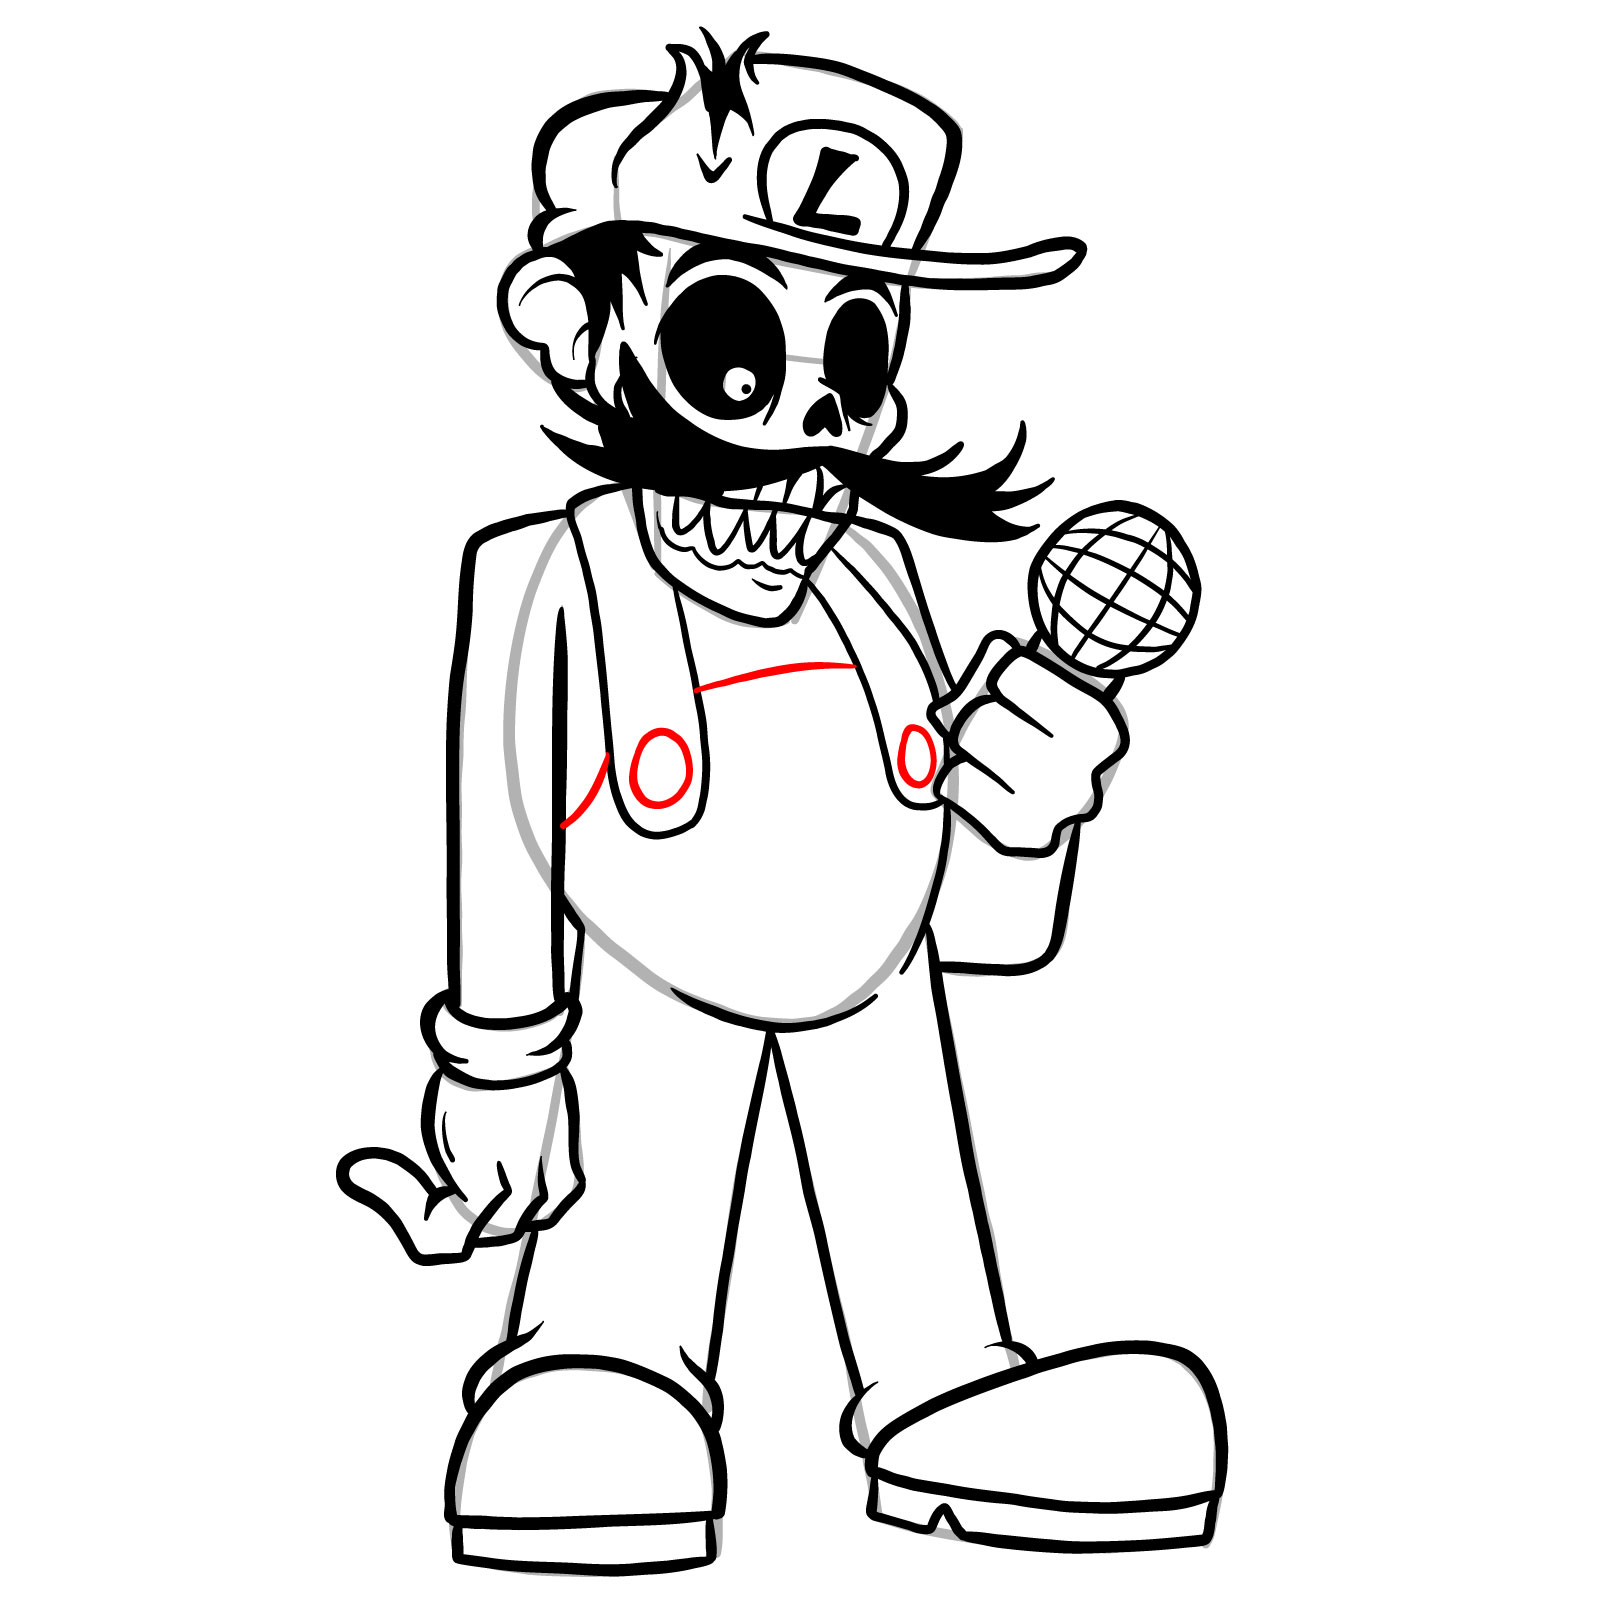 How to draw I HATE YOU Luigi - step 33